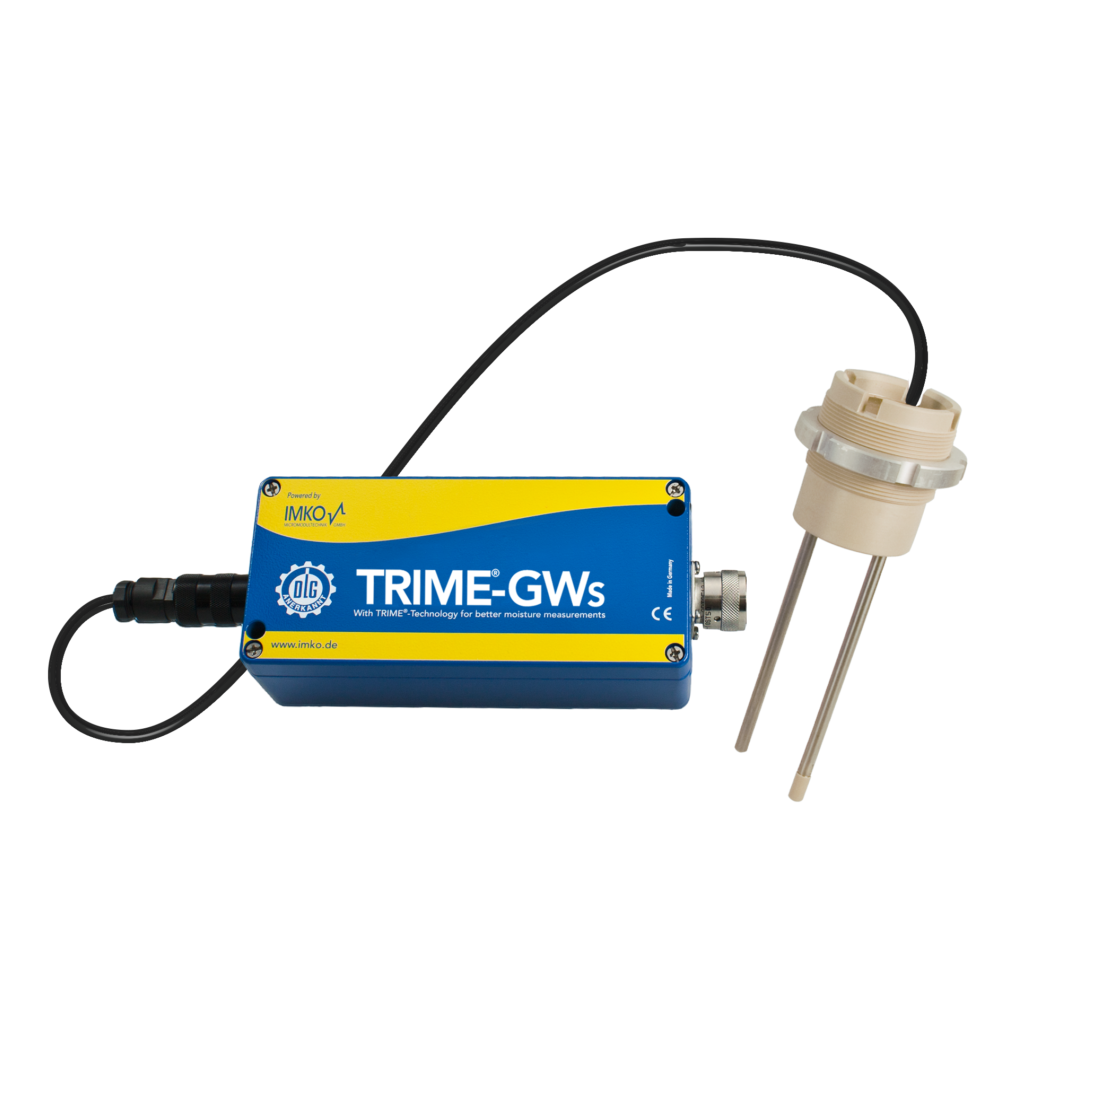 TRIME®-GWs grain moisture sensor